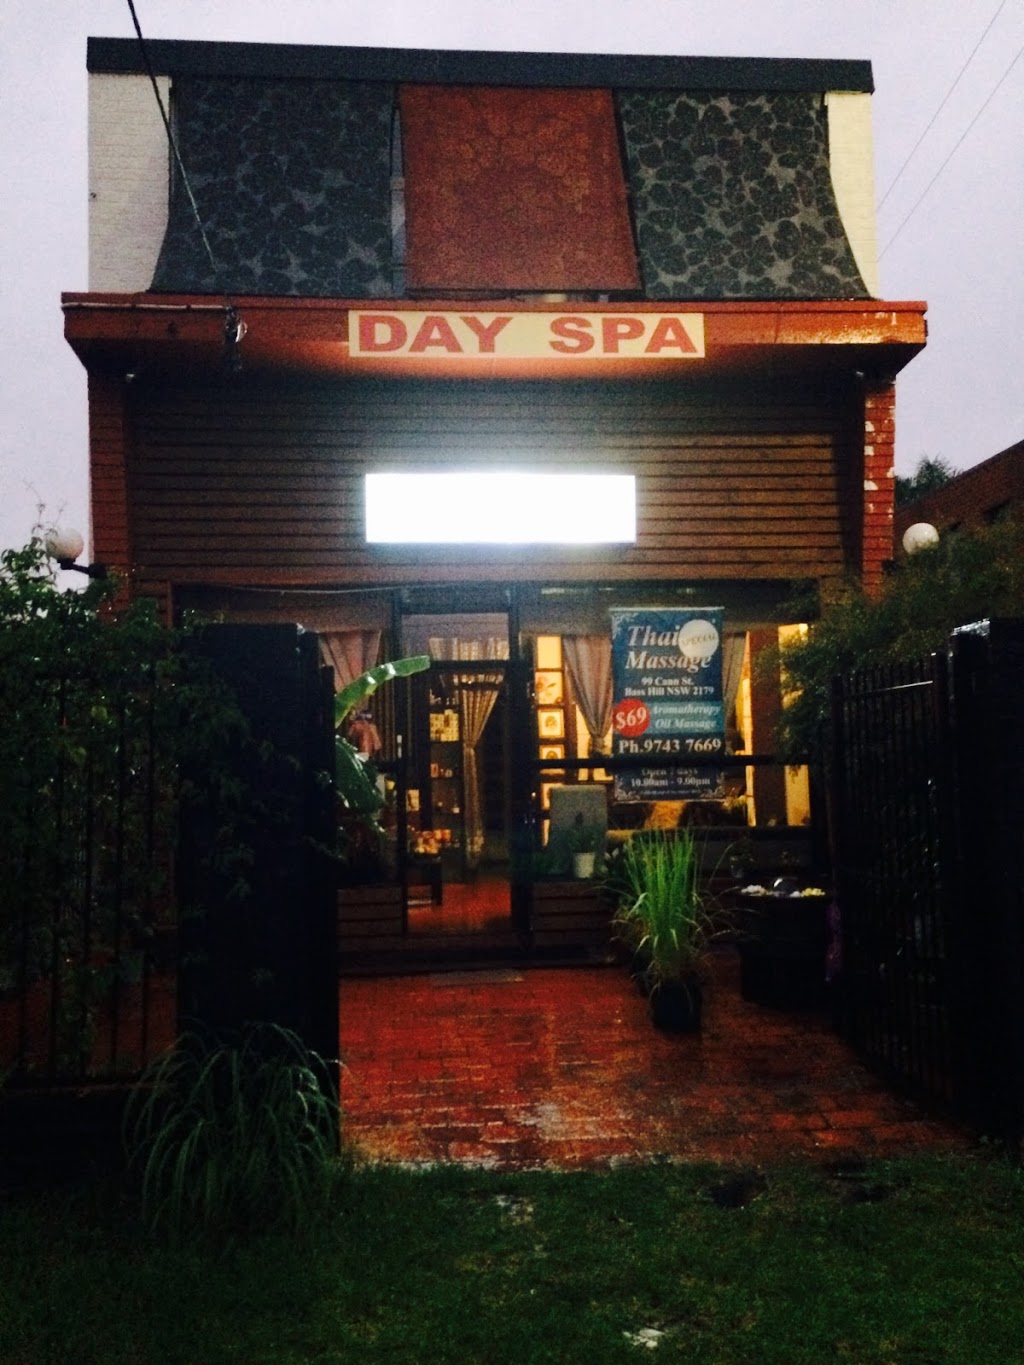 Luxsana Thai Massage and Spa | health | 99 Cann St, Bass Hill NSW 2197, Australia | 0297437669 OR +61 2 9743 7669